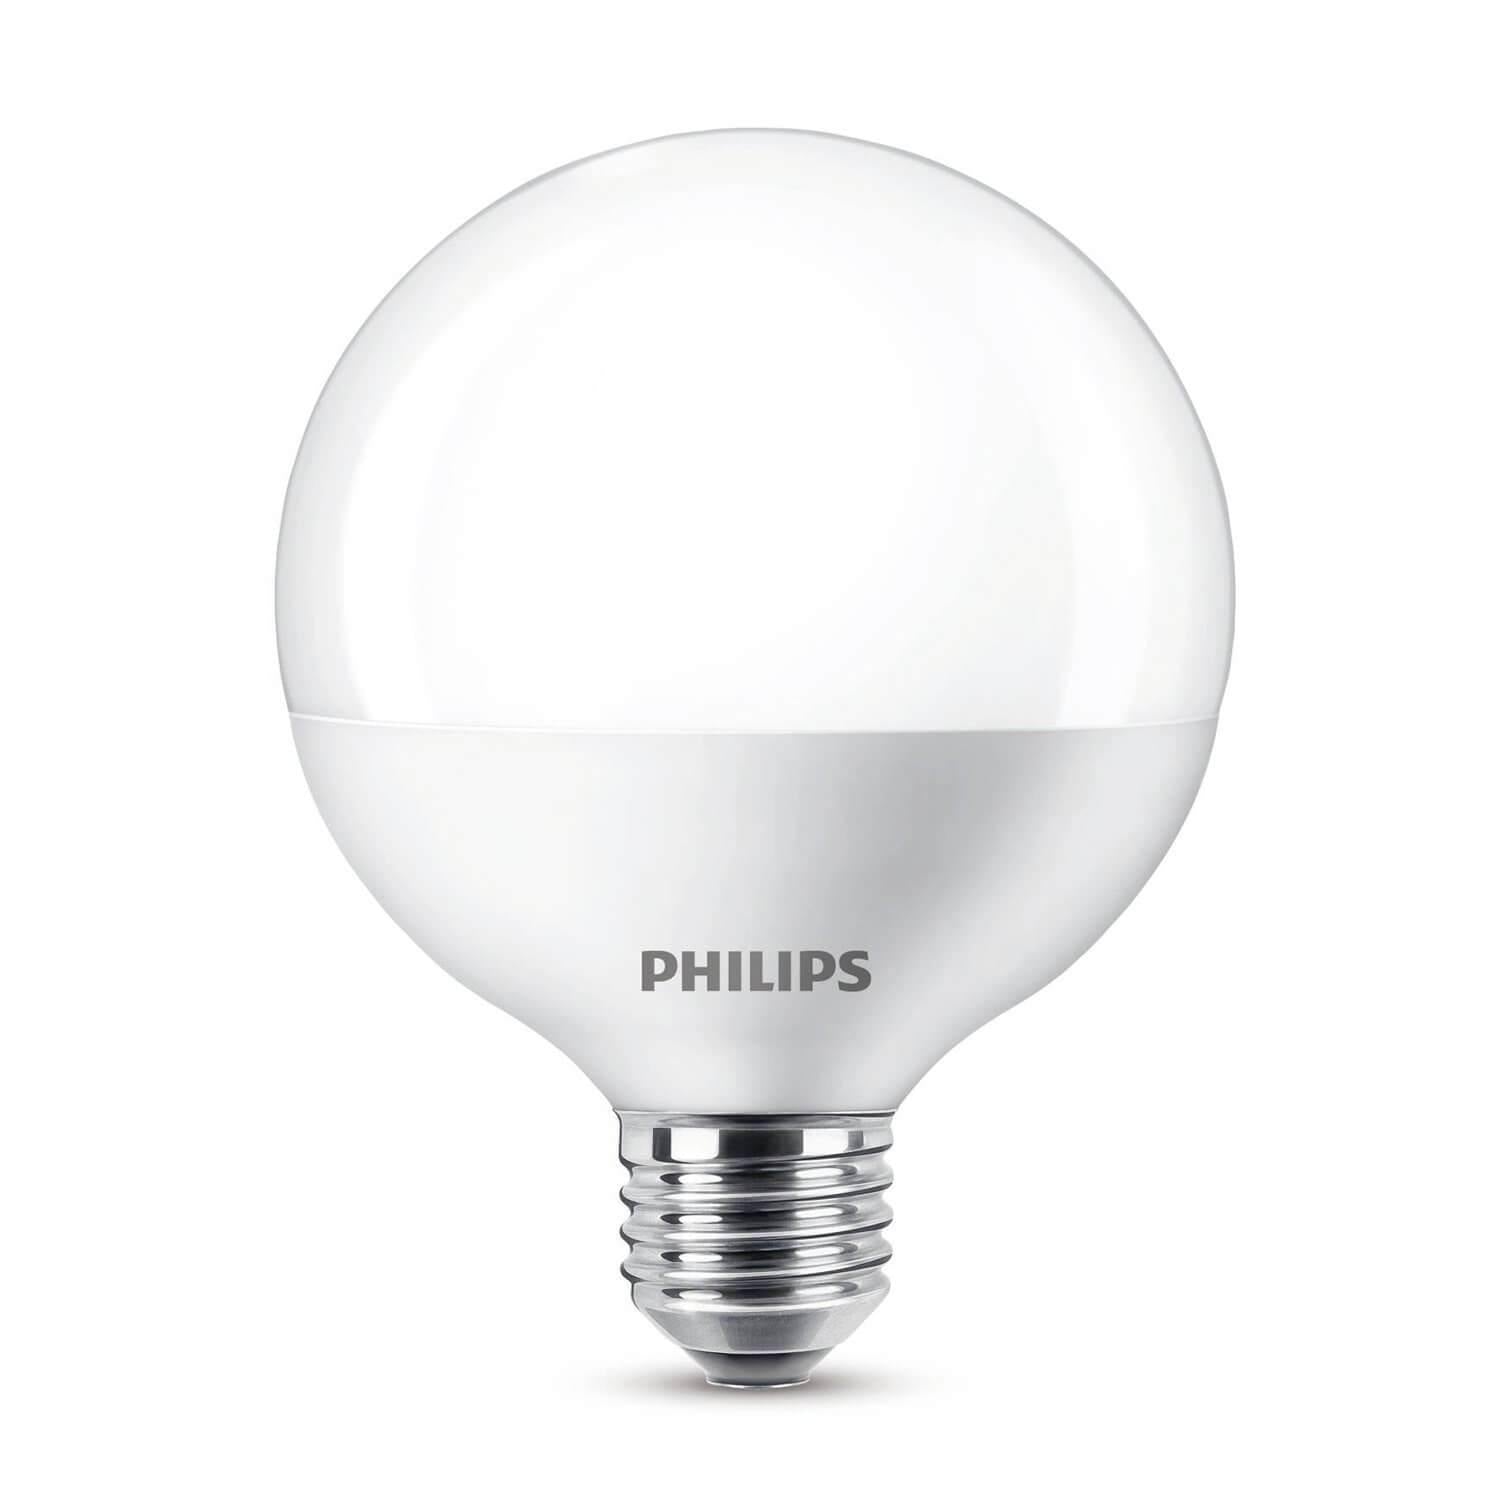 Domicilio Bec LED Philips G93 E27 15W 1521 lumeni, cu glob mat